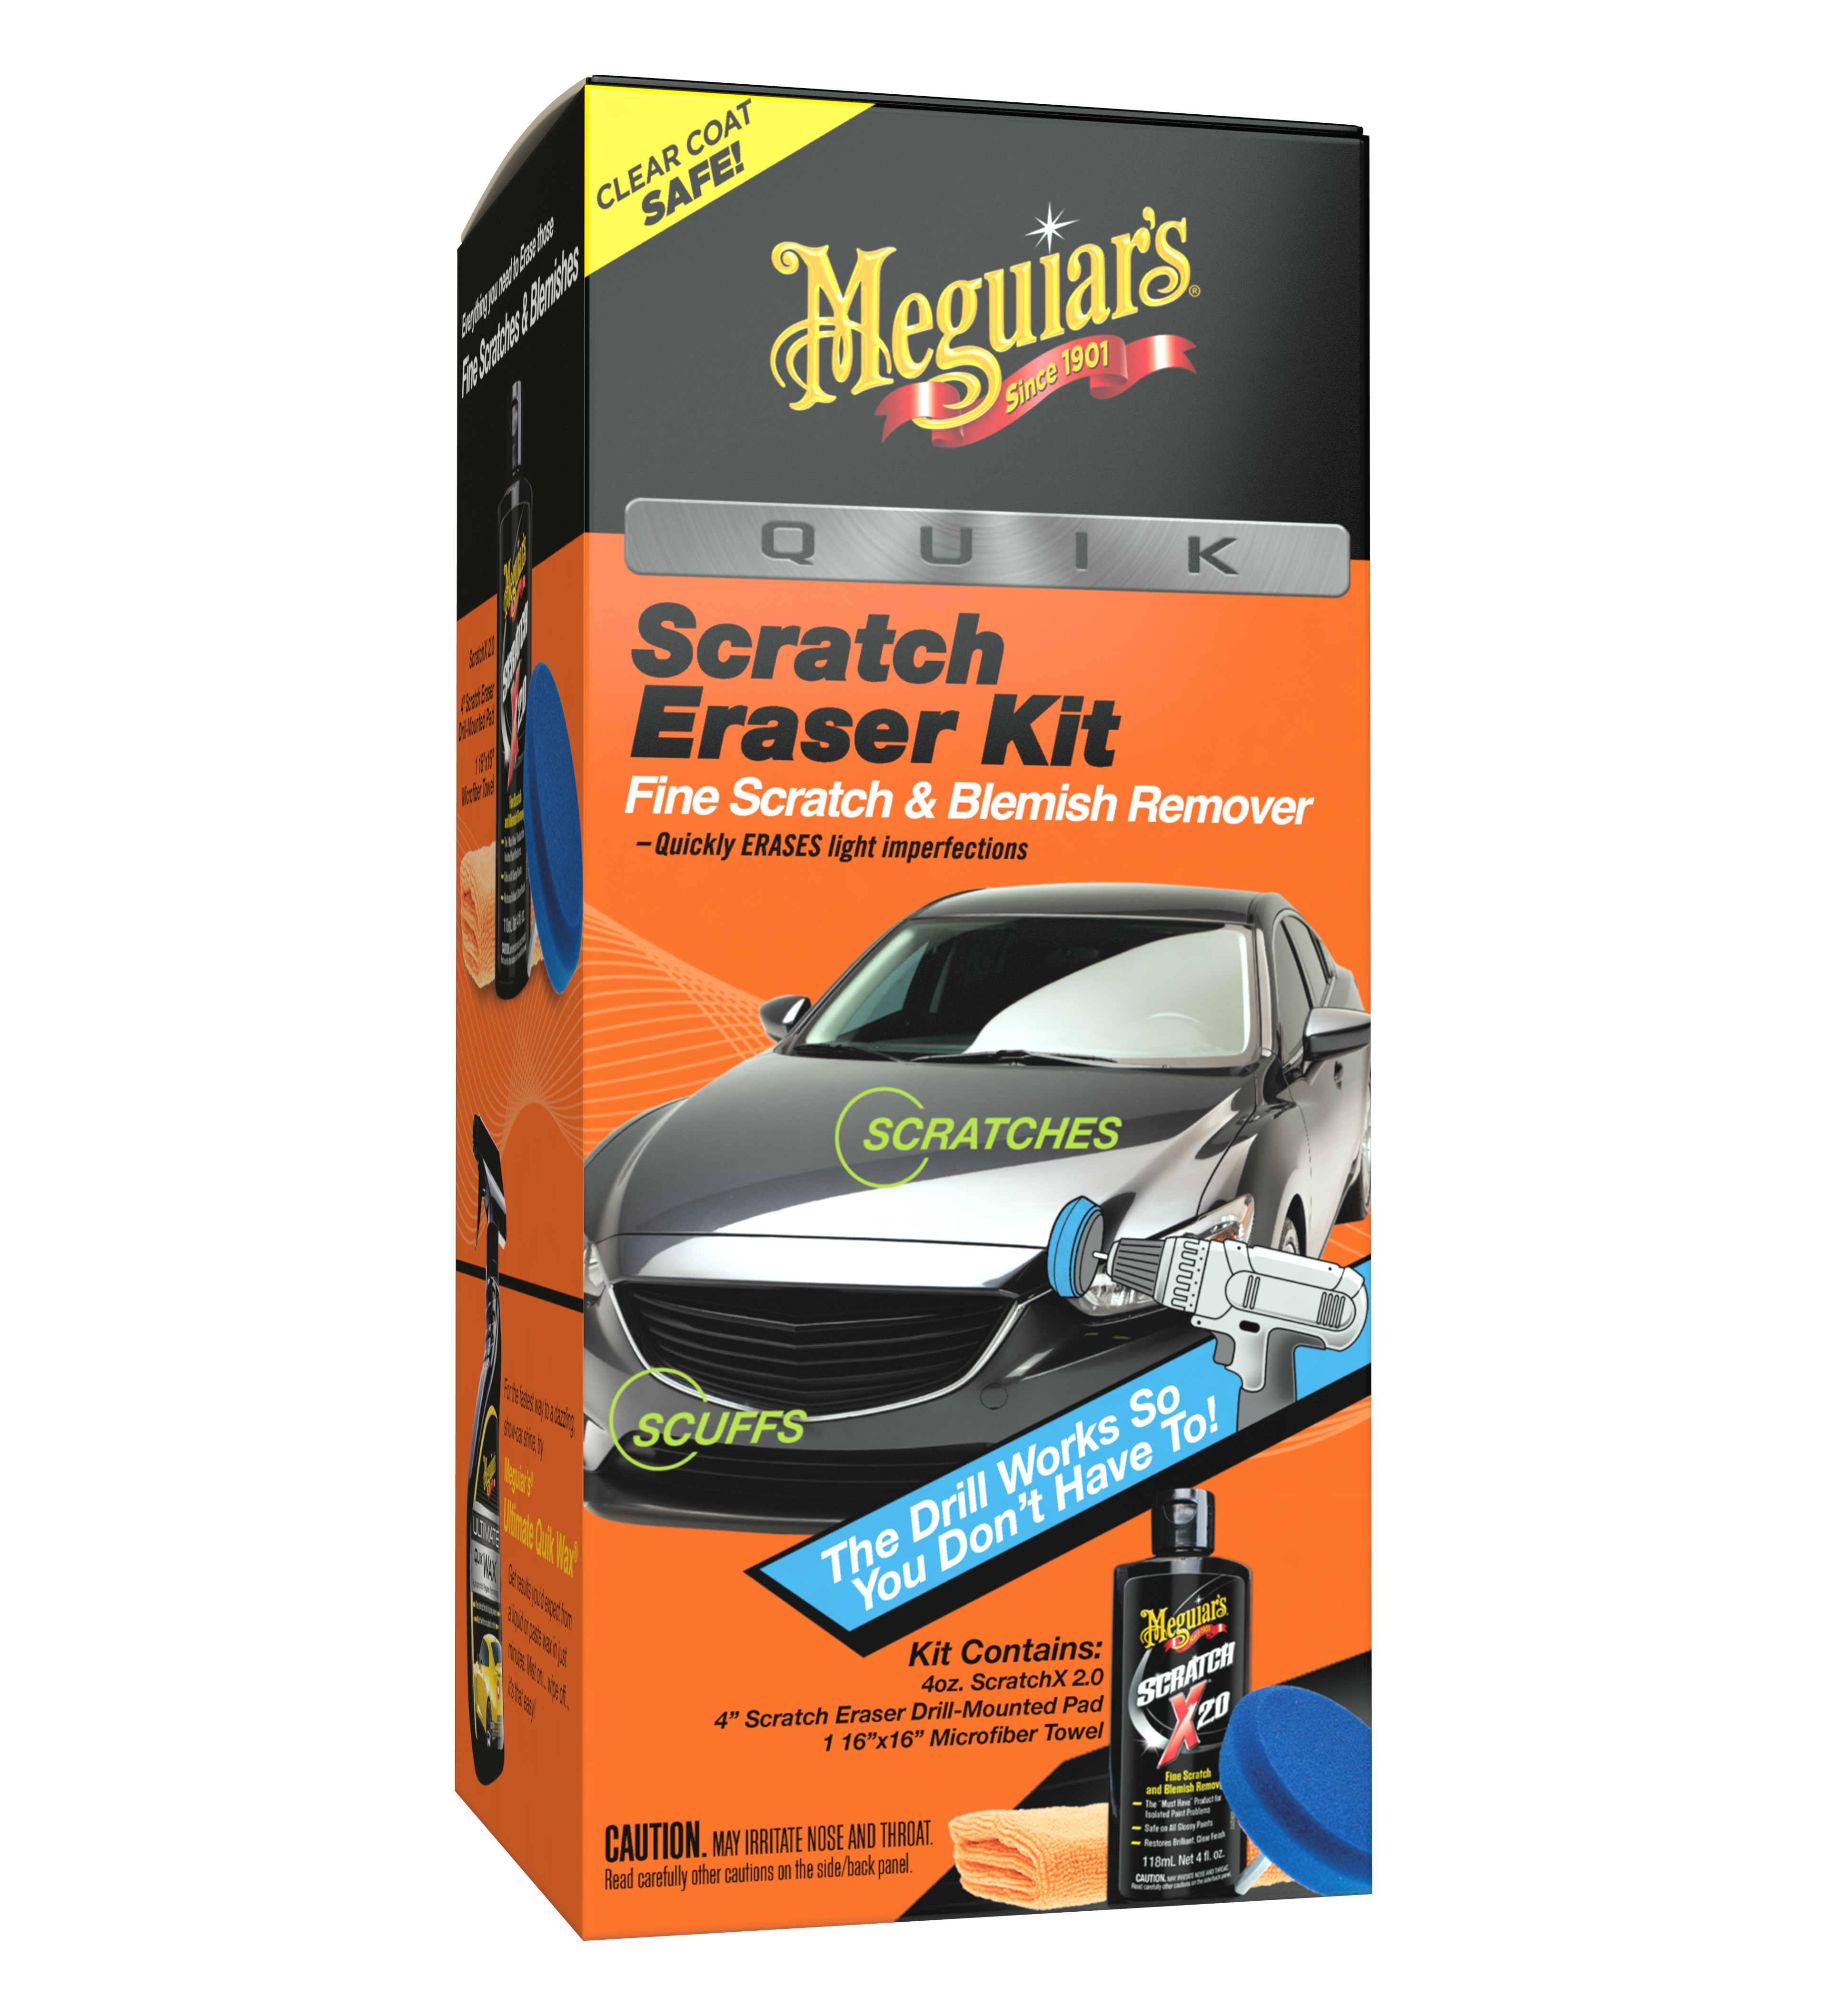 Kit Remover De Rayas Quick Scratch Eraser Kit (G190200) Meguiar’s